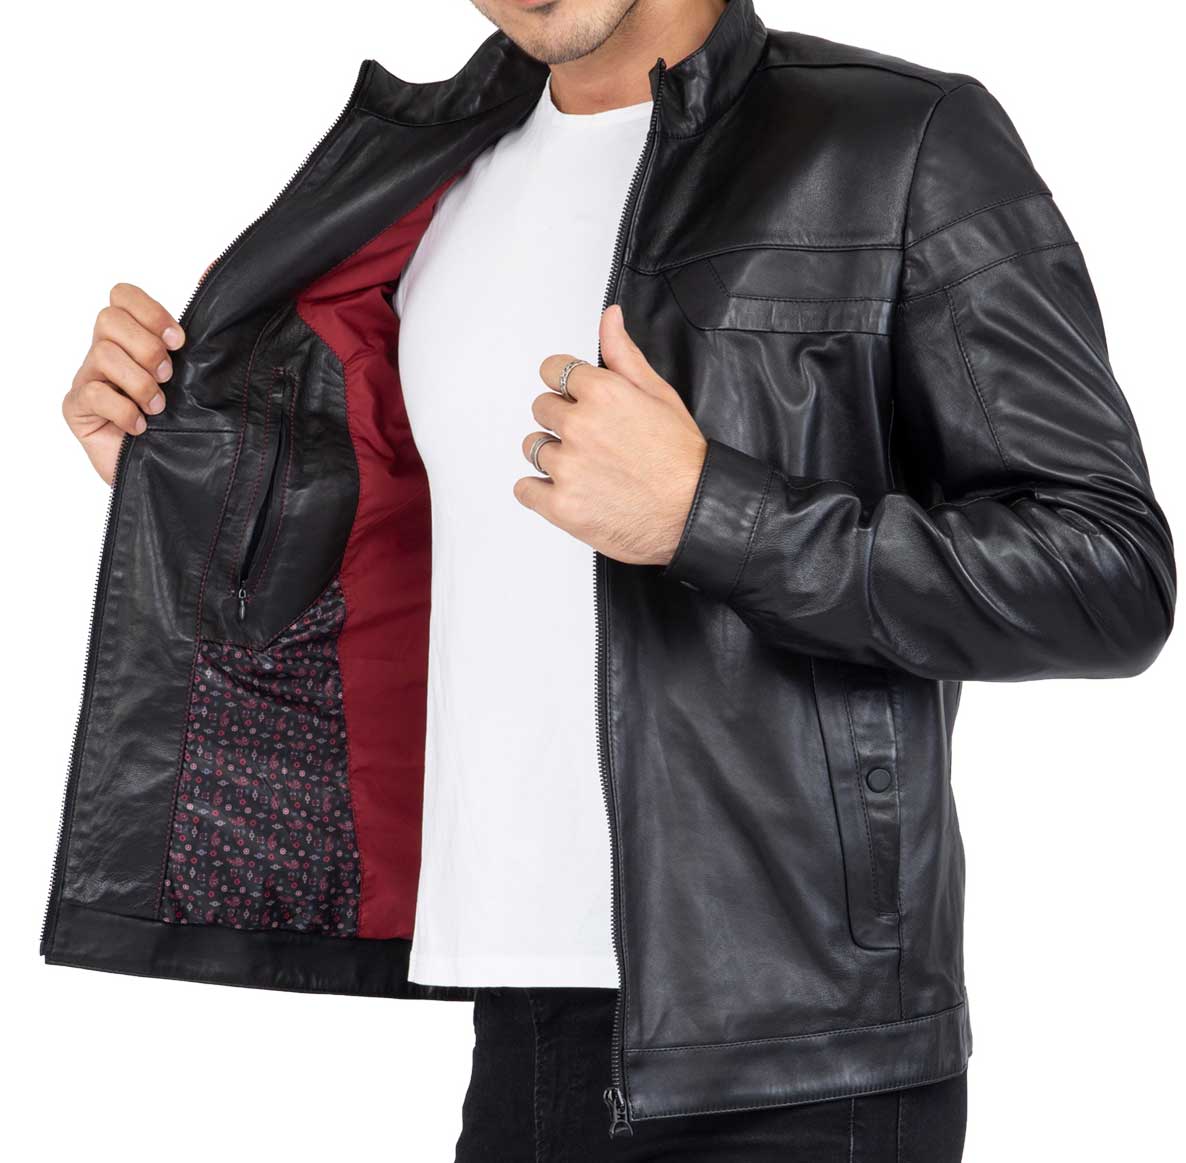 Genuine-Leather-Jacket-For-Men-Black-Leather